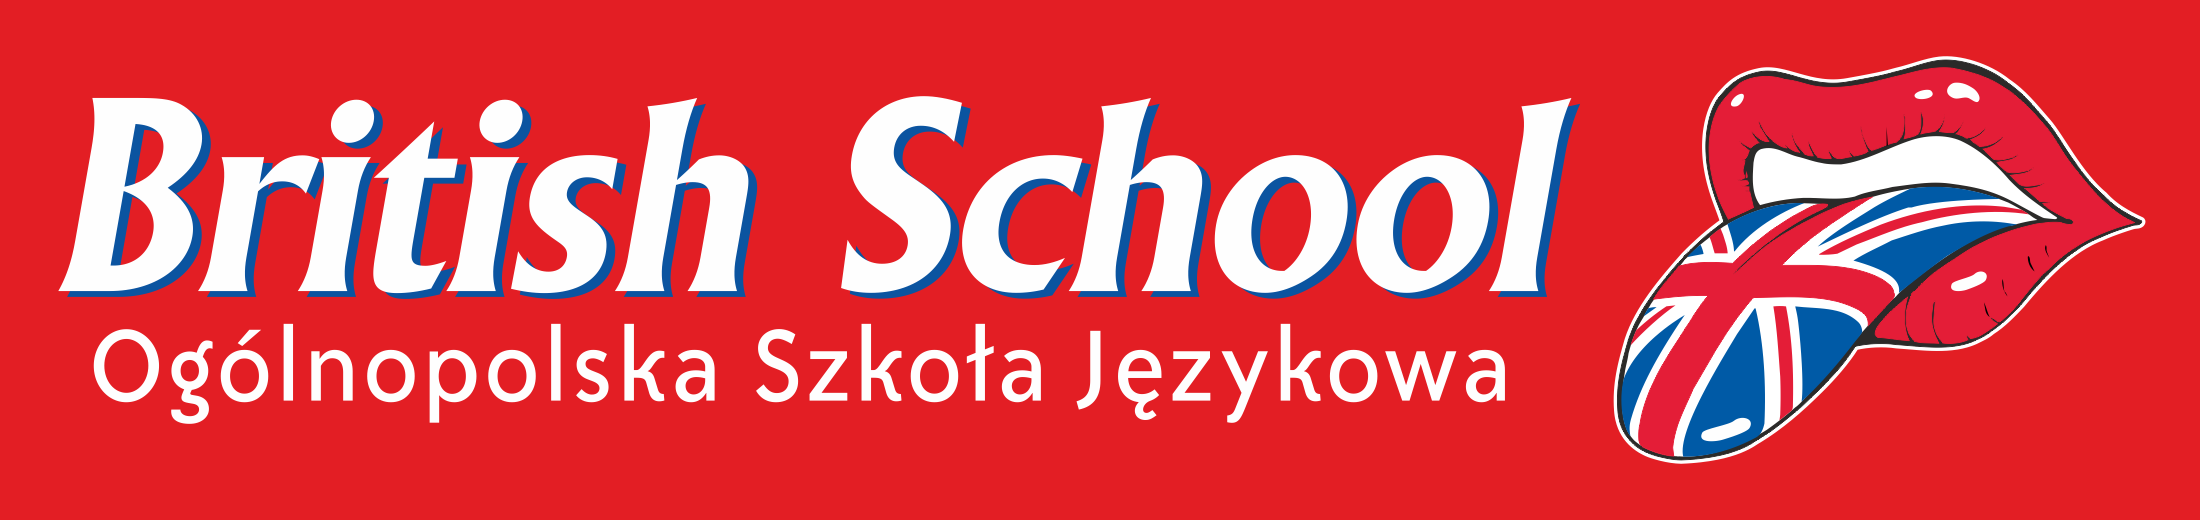 British School Szczecin